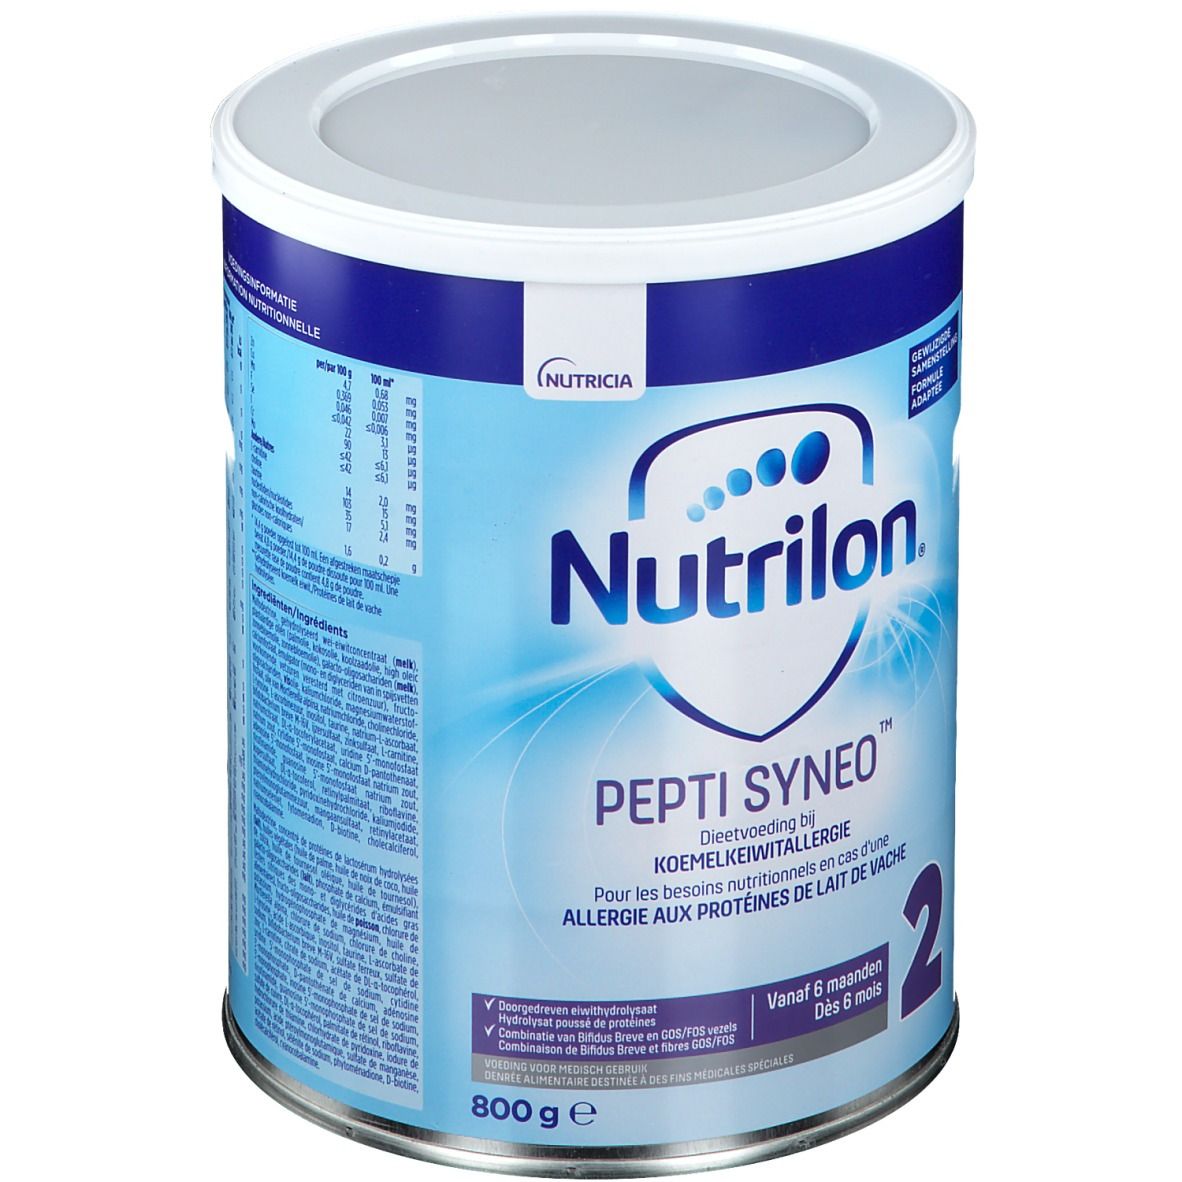 Nutrilon Pepti Syneo 2 Opvolgmelk Poeder